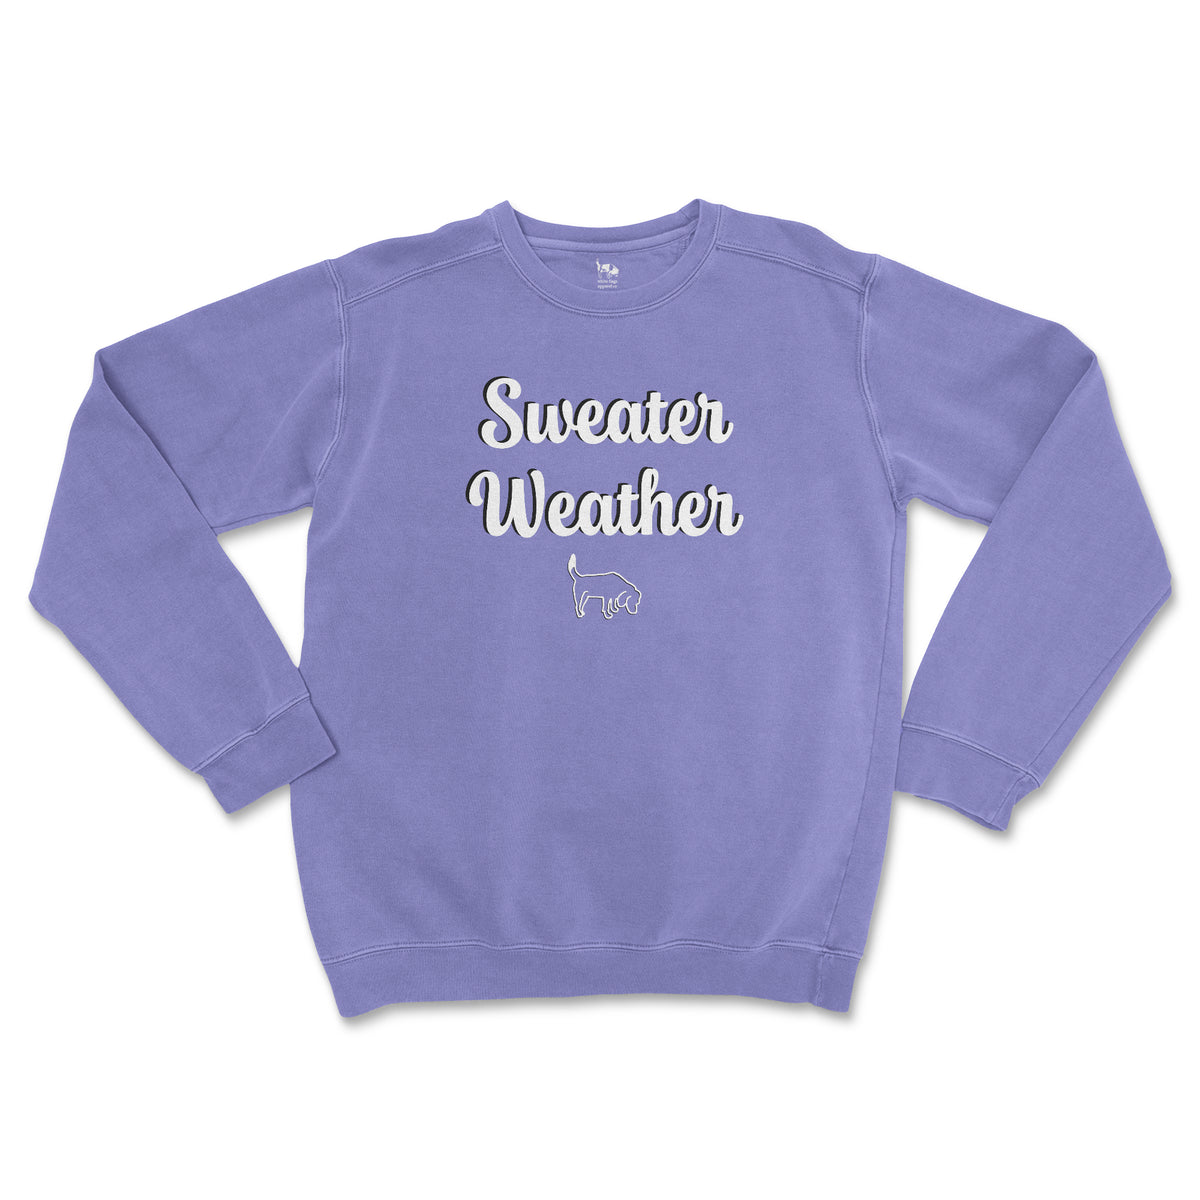 Soft Pastel Crewneck - Sweater Weather